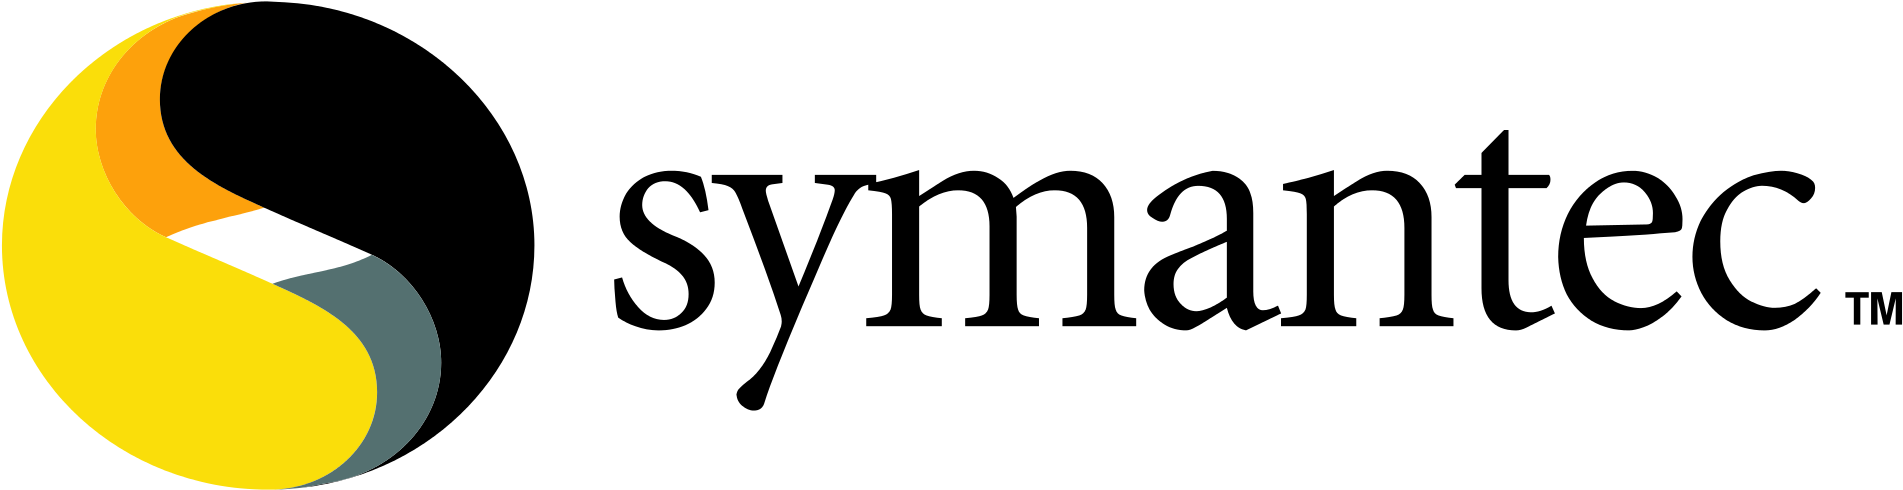 Open - Symantec Logo Norton Antivirus (2000x567), Png Download